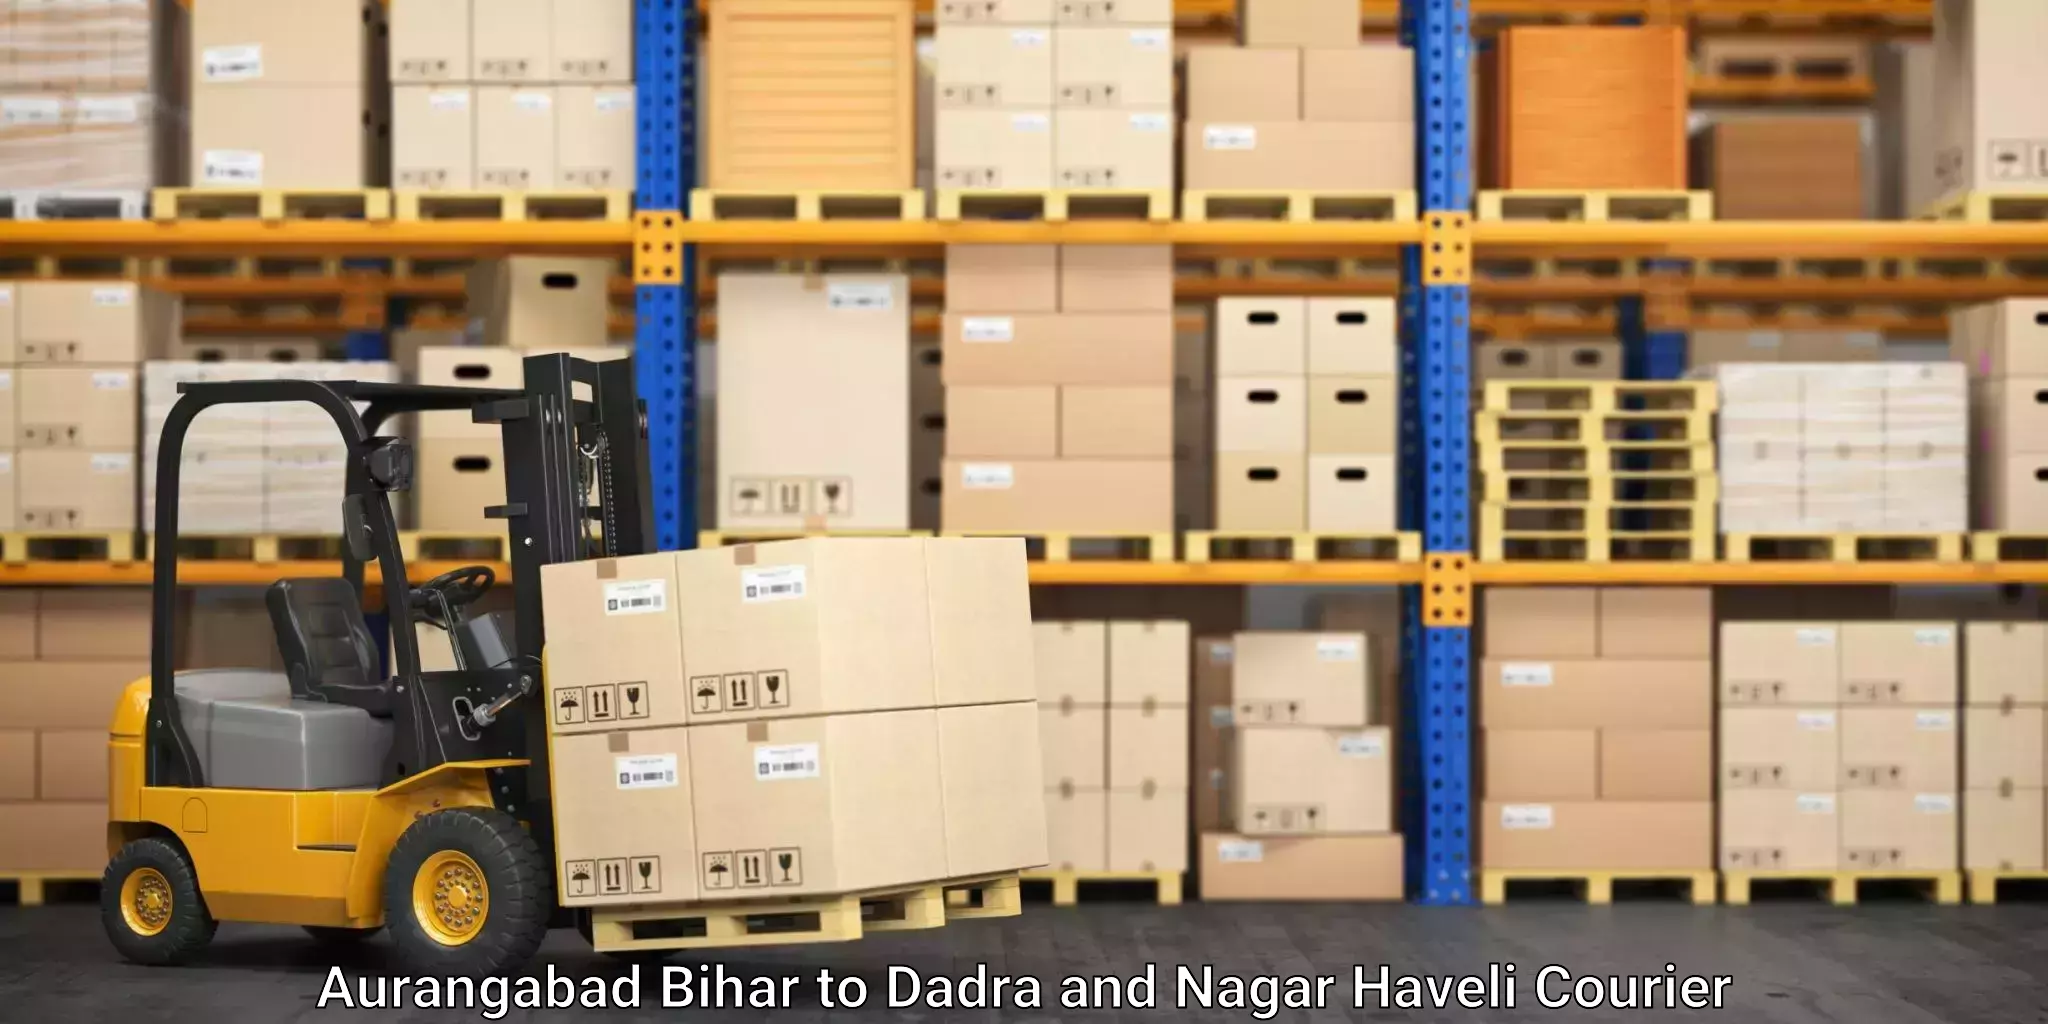 Full-service movers Aurangabad Bihar to Dadra and Nagar Haveli